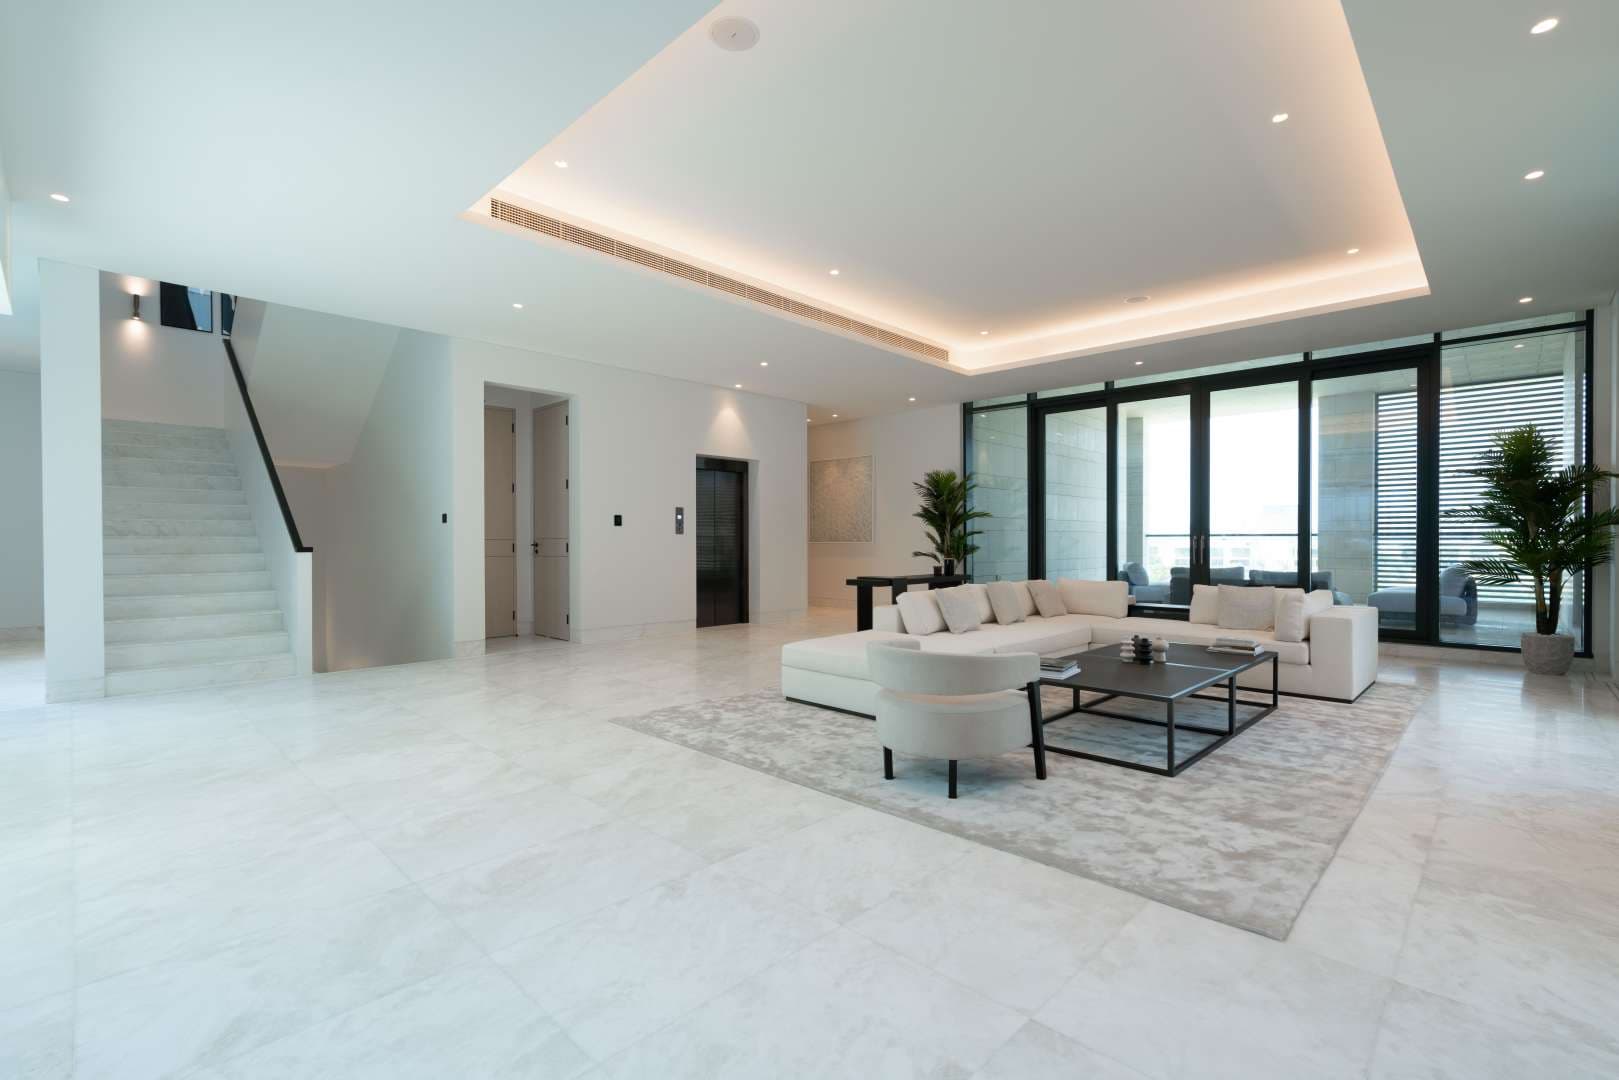 9 Bedroom Villa For Sale Dubai Hills View Lp05164 19c773b66376d200.jpg